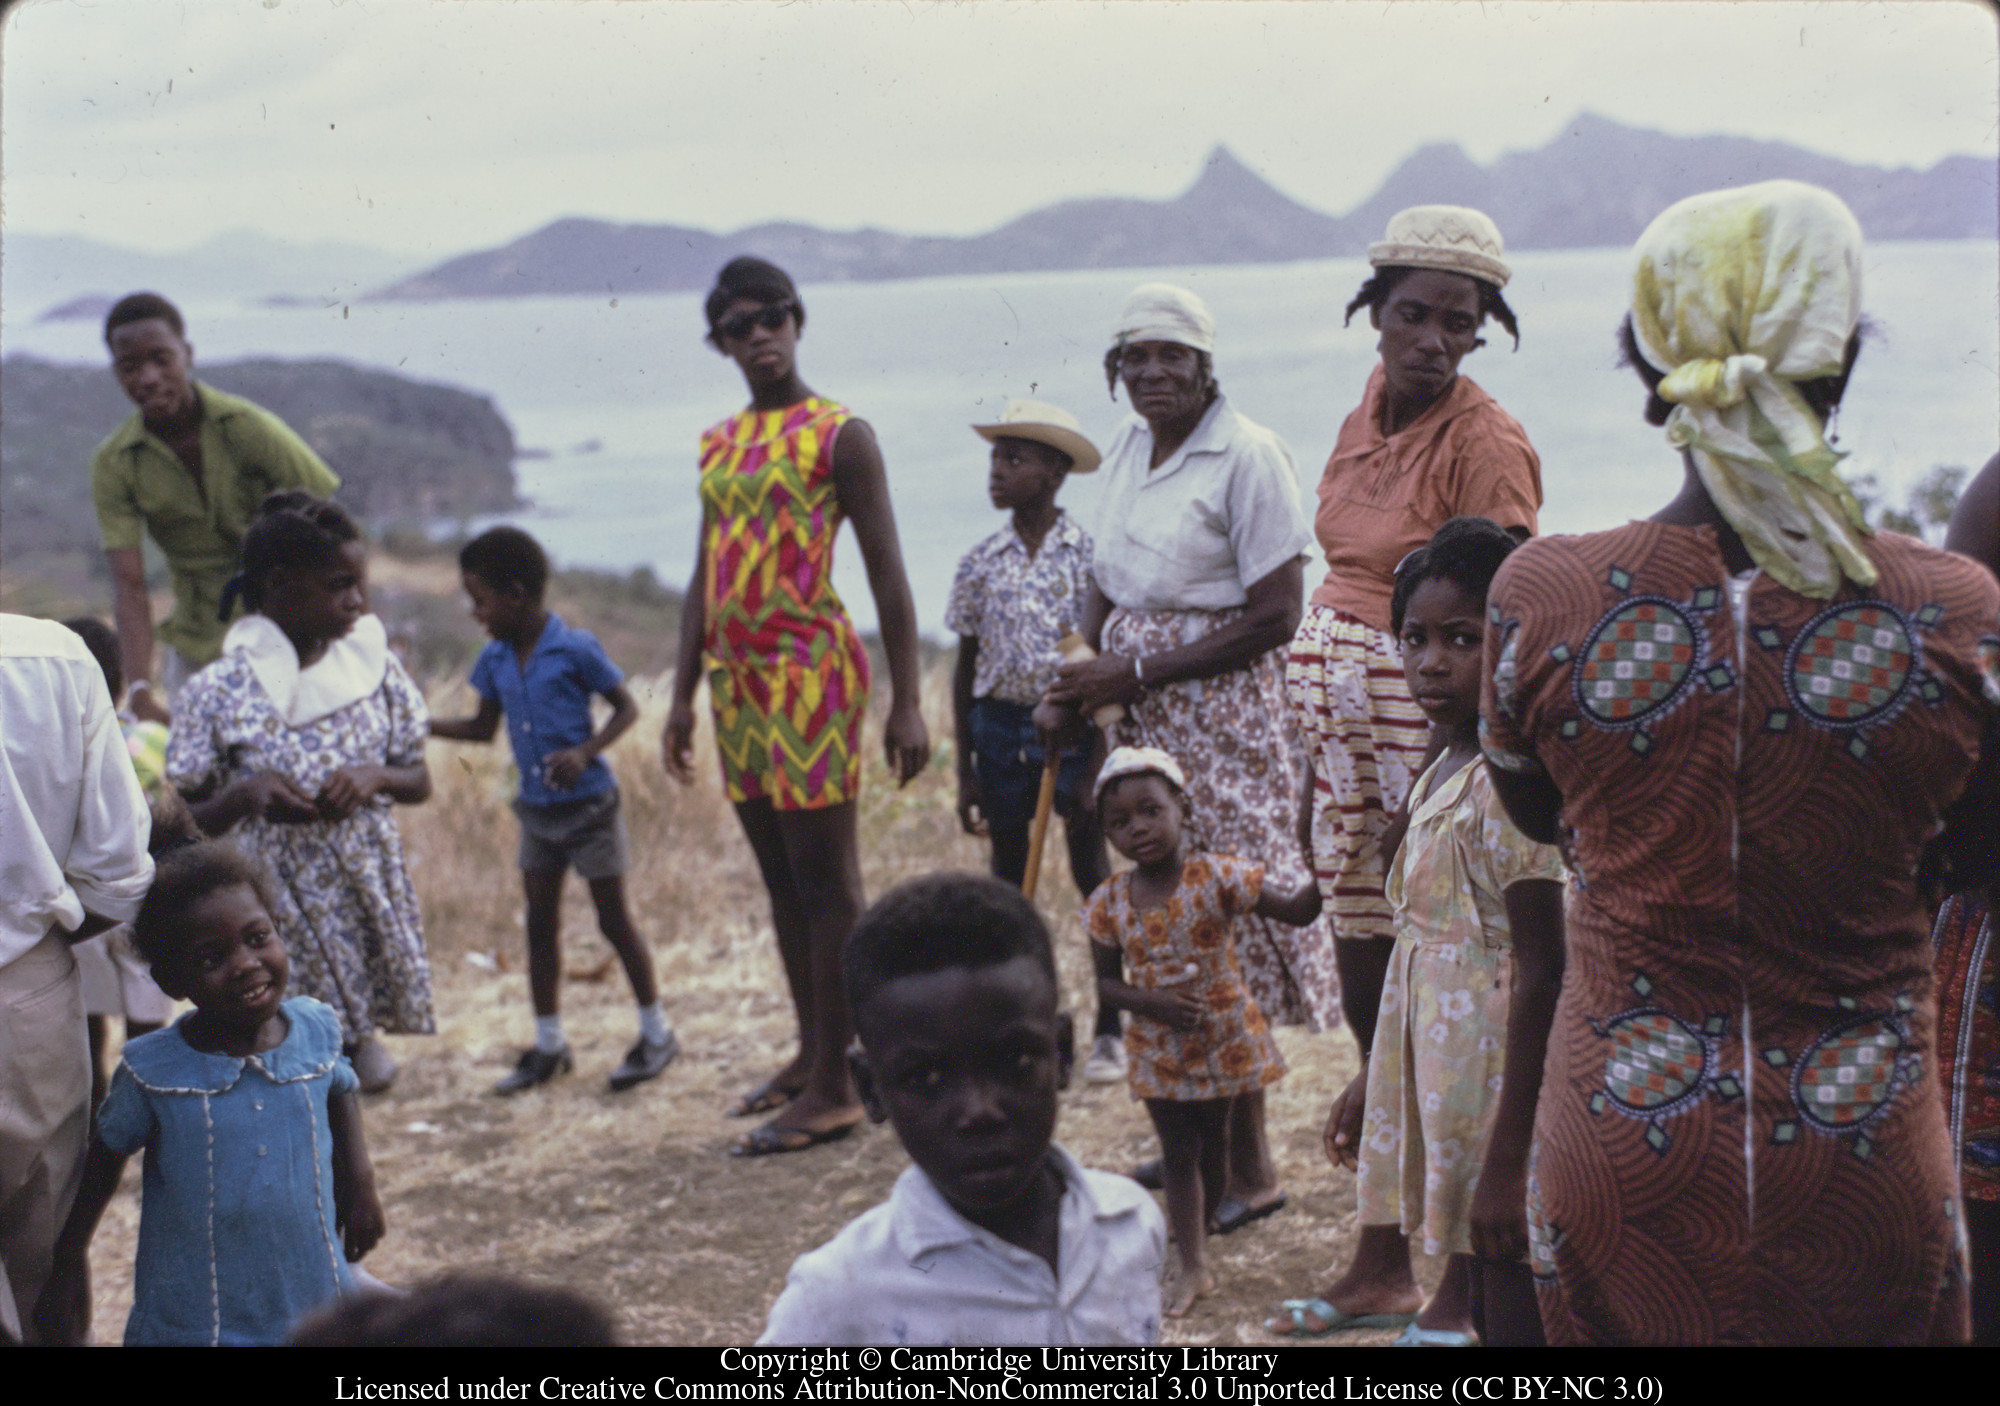 Mayrean [i.e. Mayreau?], Grenadines : March 71, 1971-03